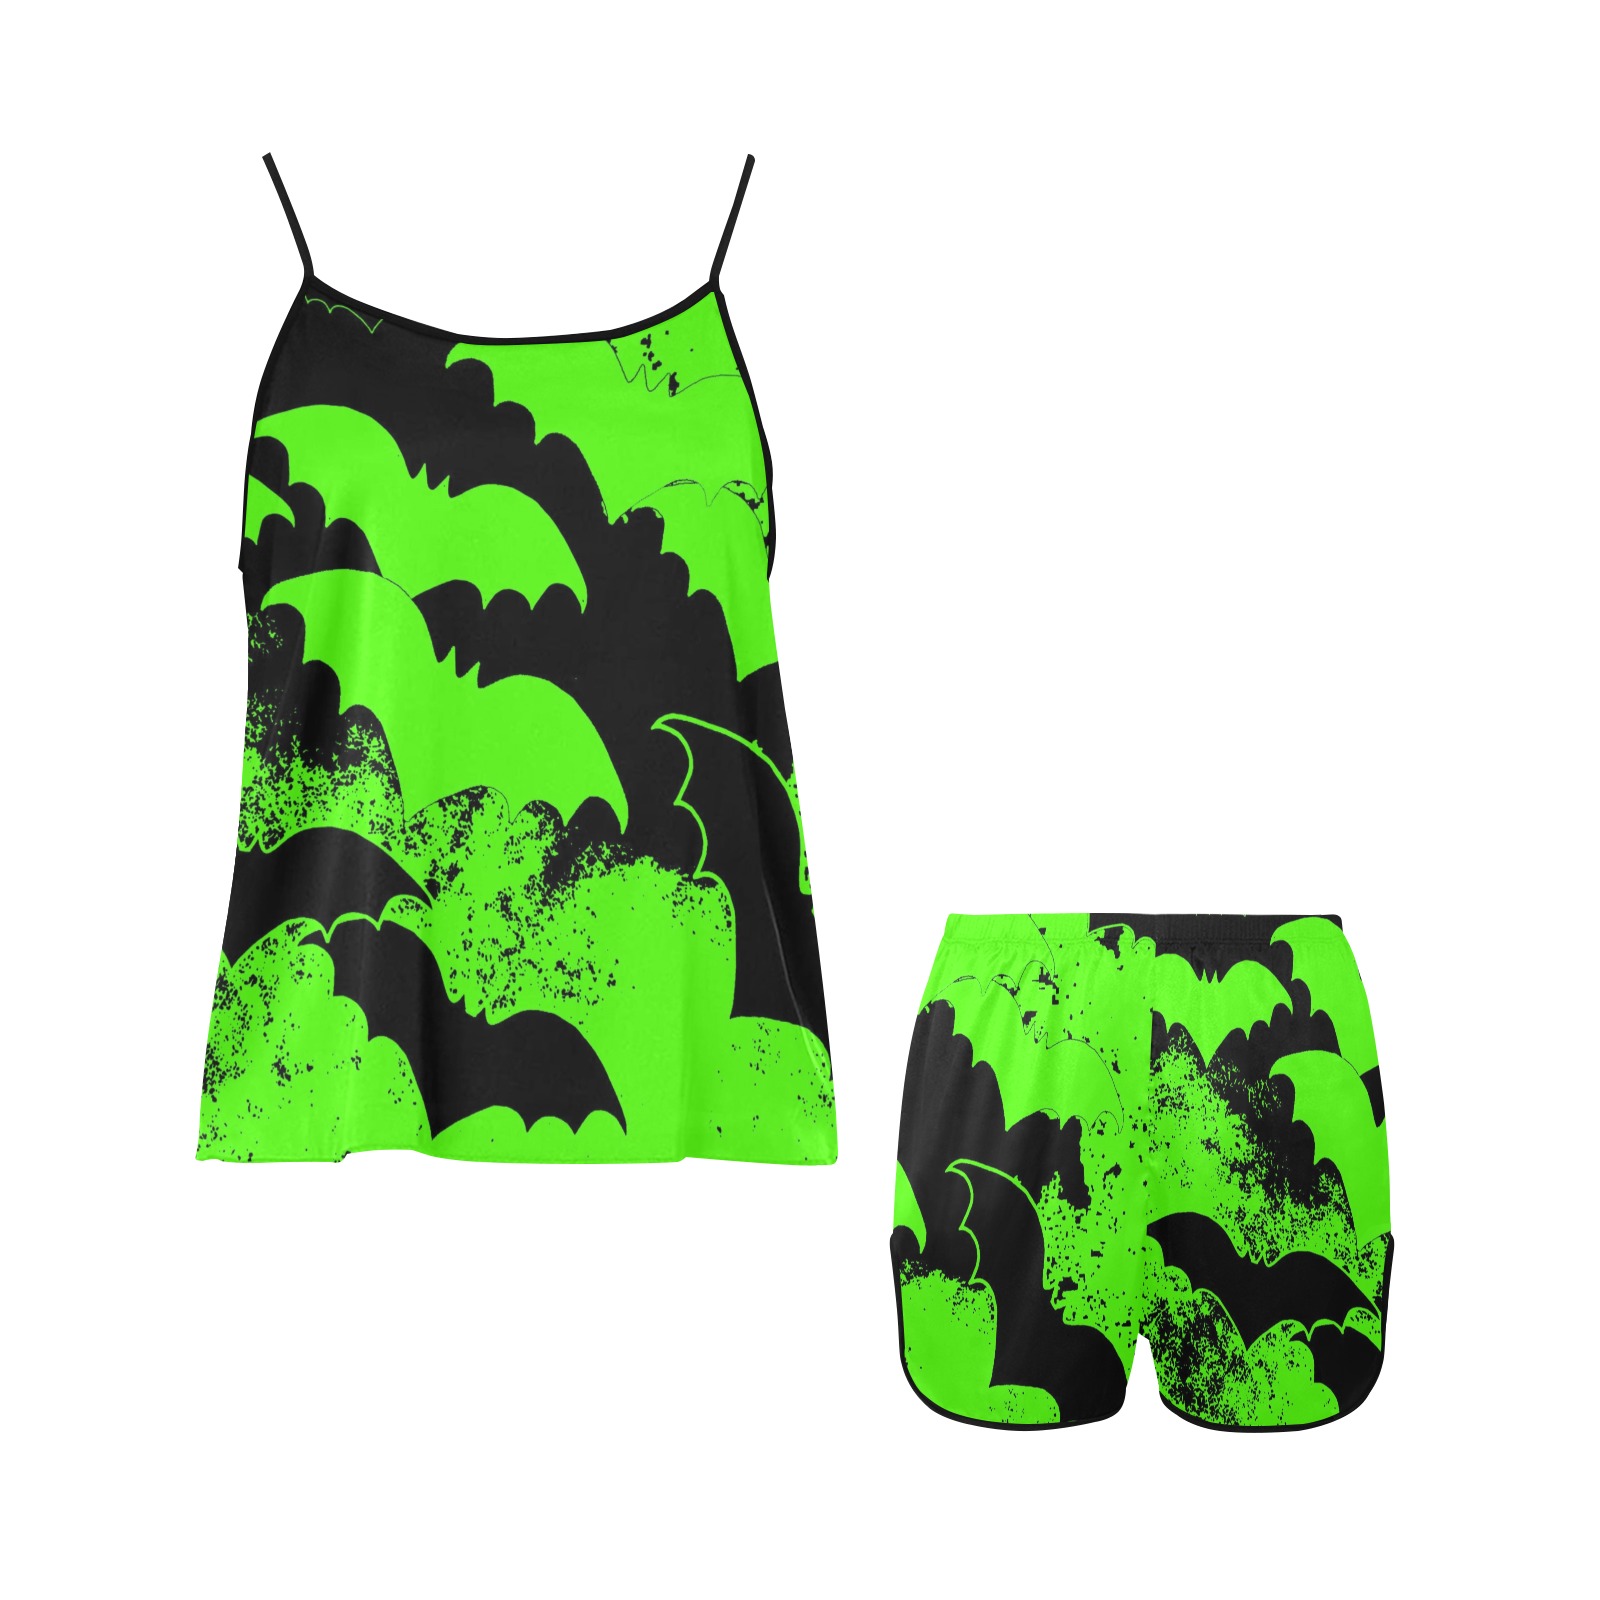 Black Bats In Flight Green Women's Spaghetti Strap Short Pajama Set